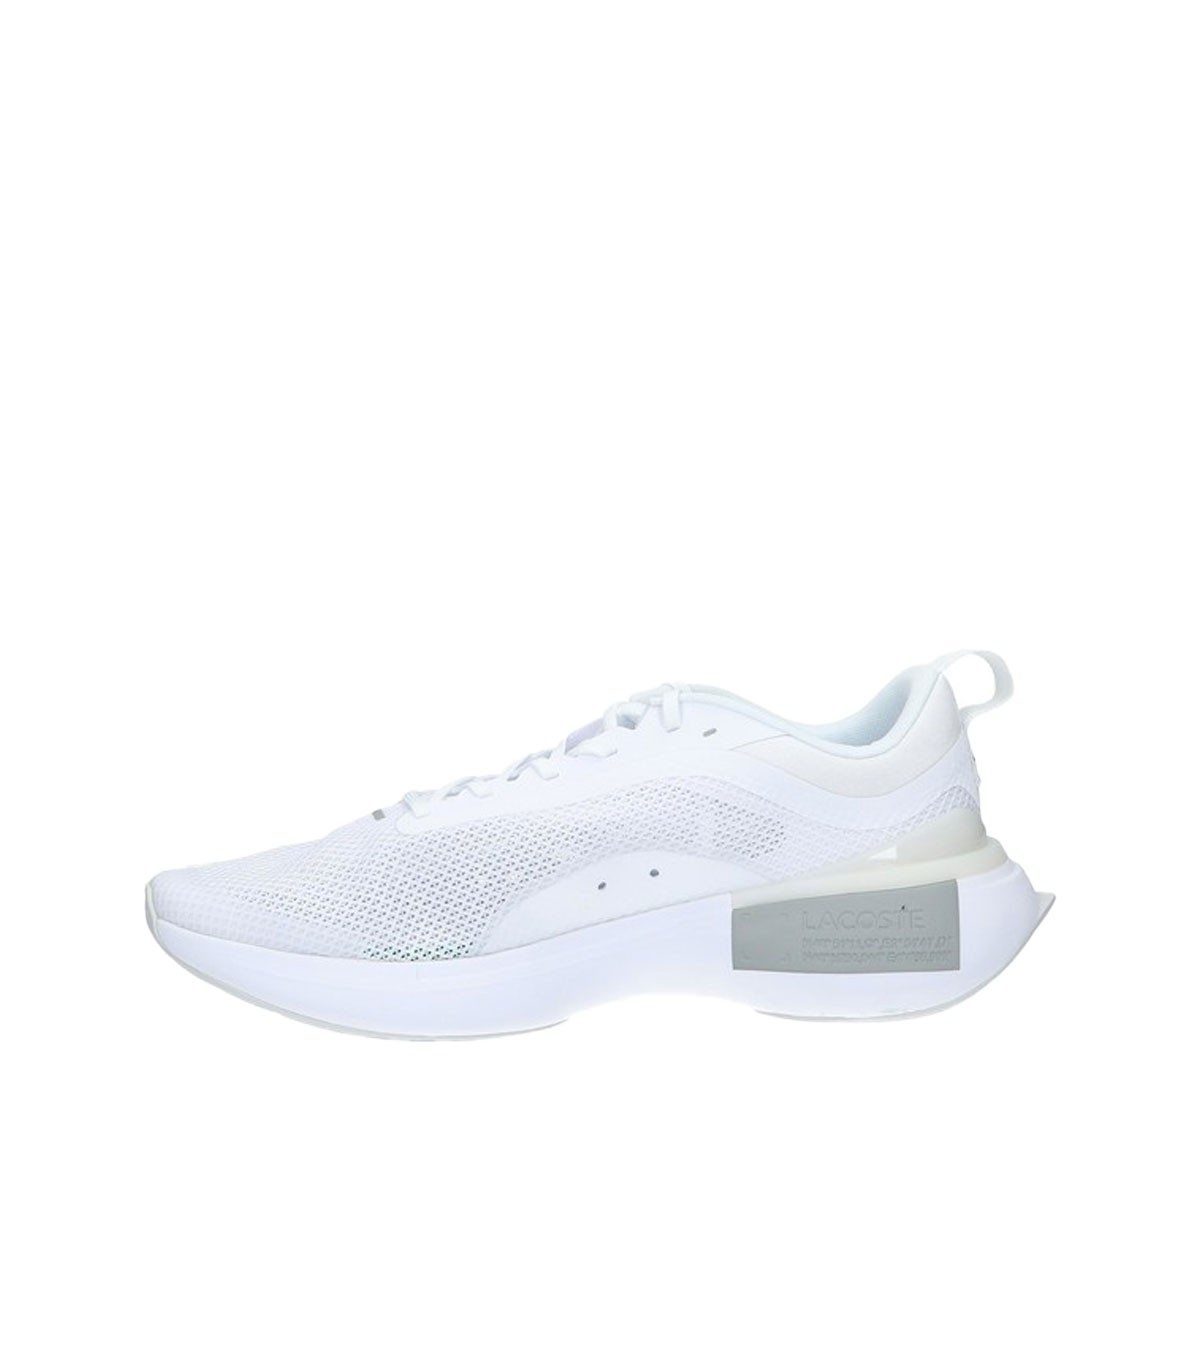 Lacoste - Calzado Athleisure Sneakers - Blanco